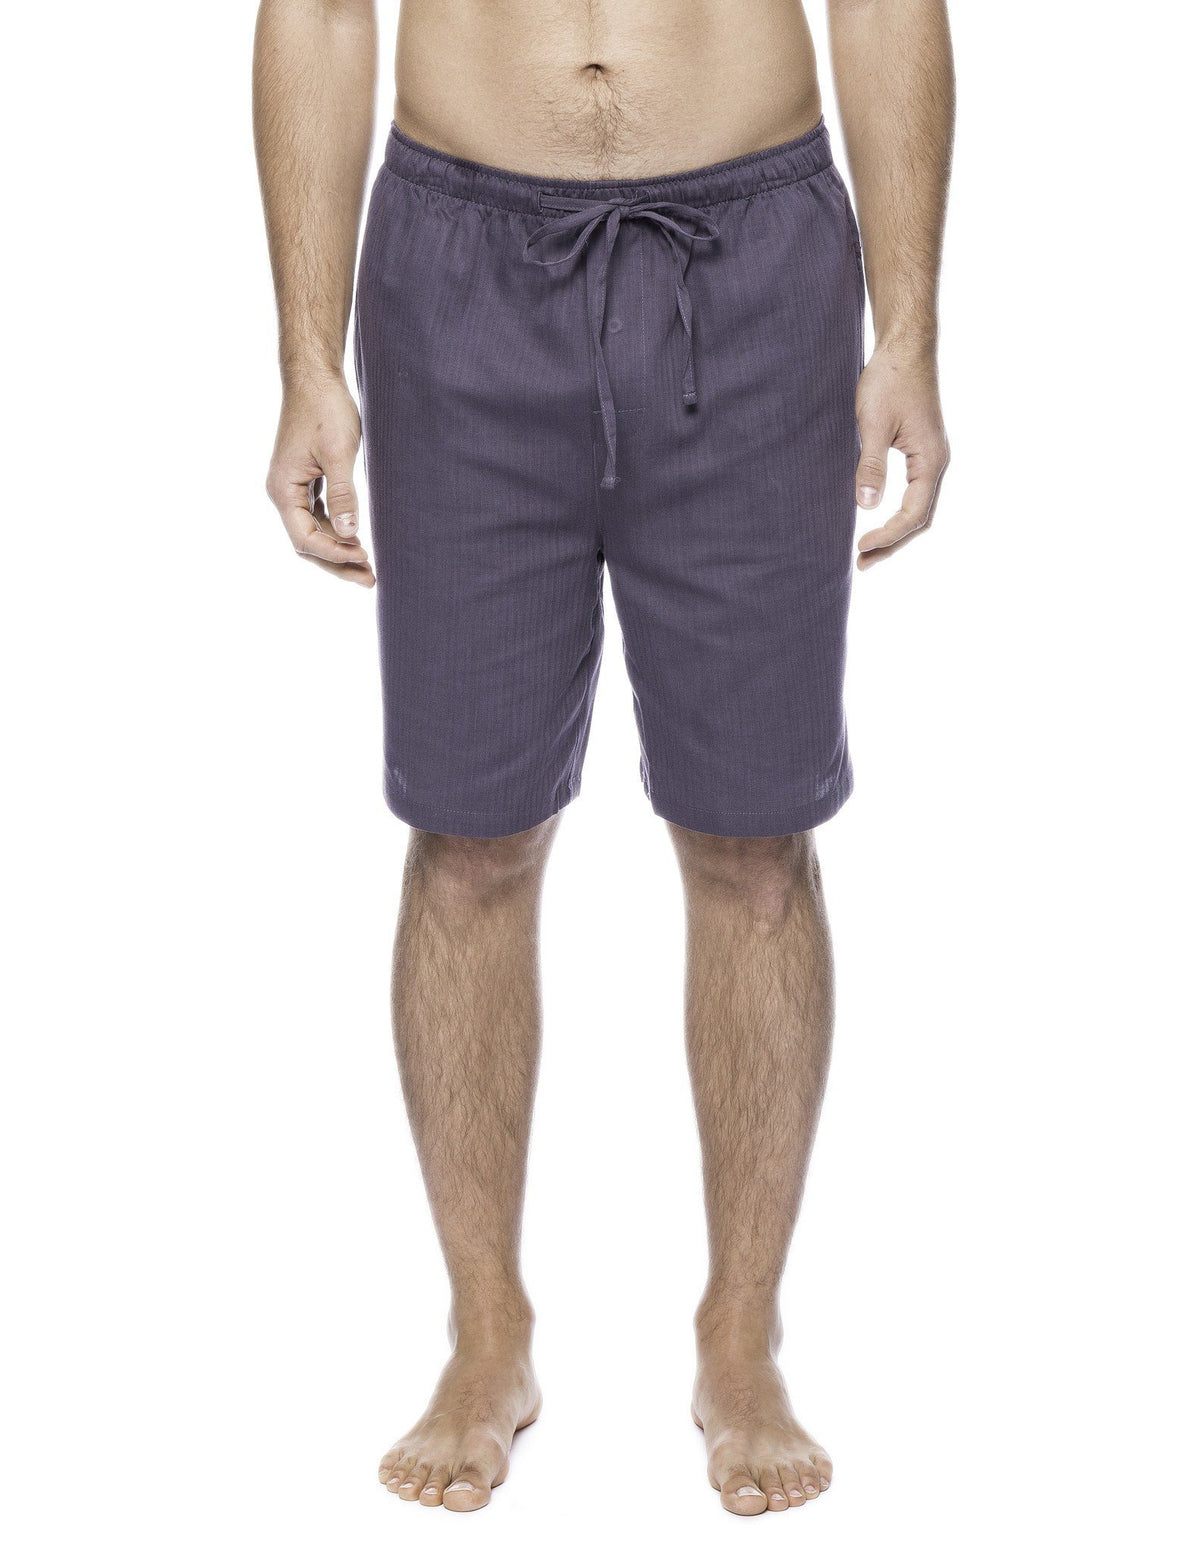 Men's 100% Woven Cotton Lounge Shorts - Herringbone Dark Grey